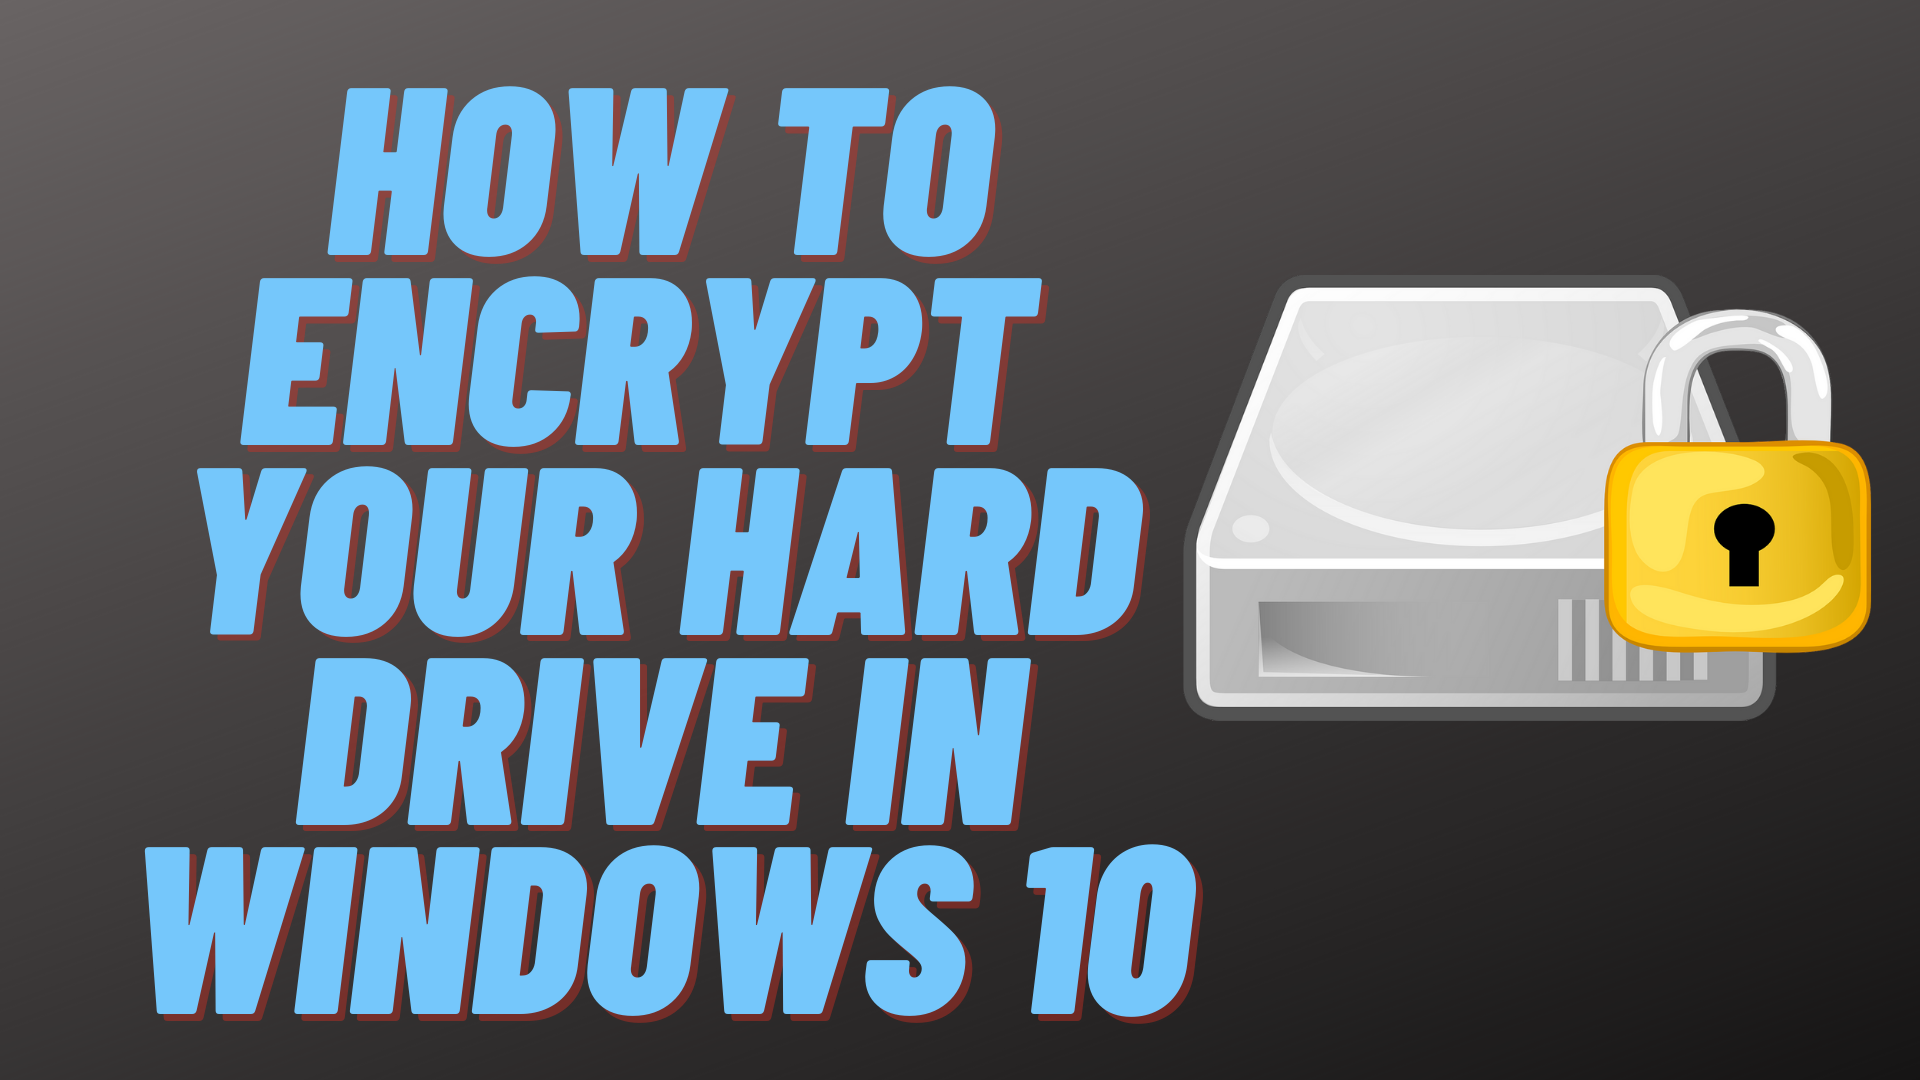 encrypt flash drive windows 10